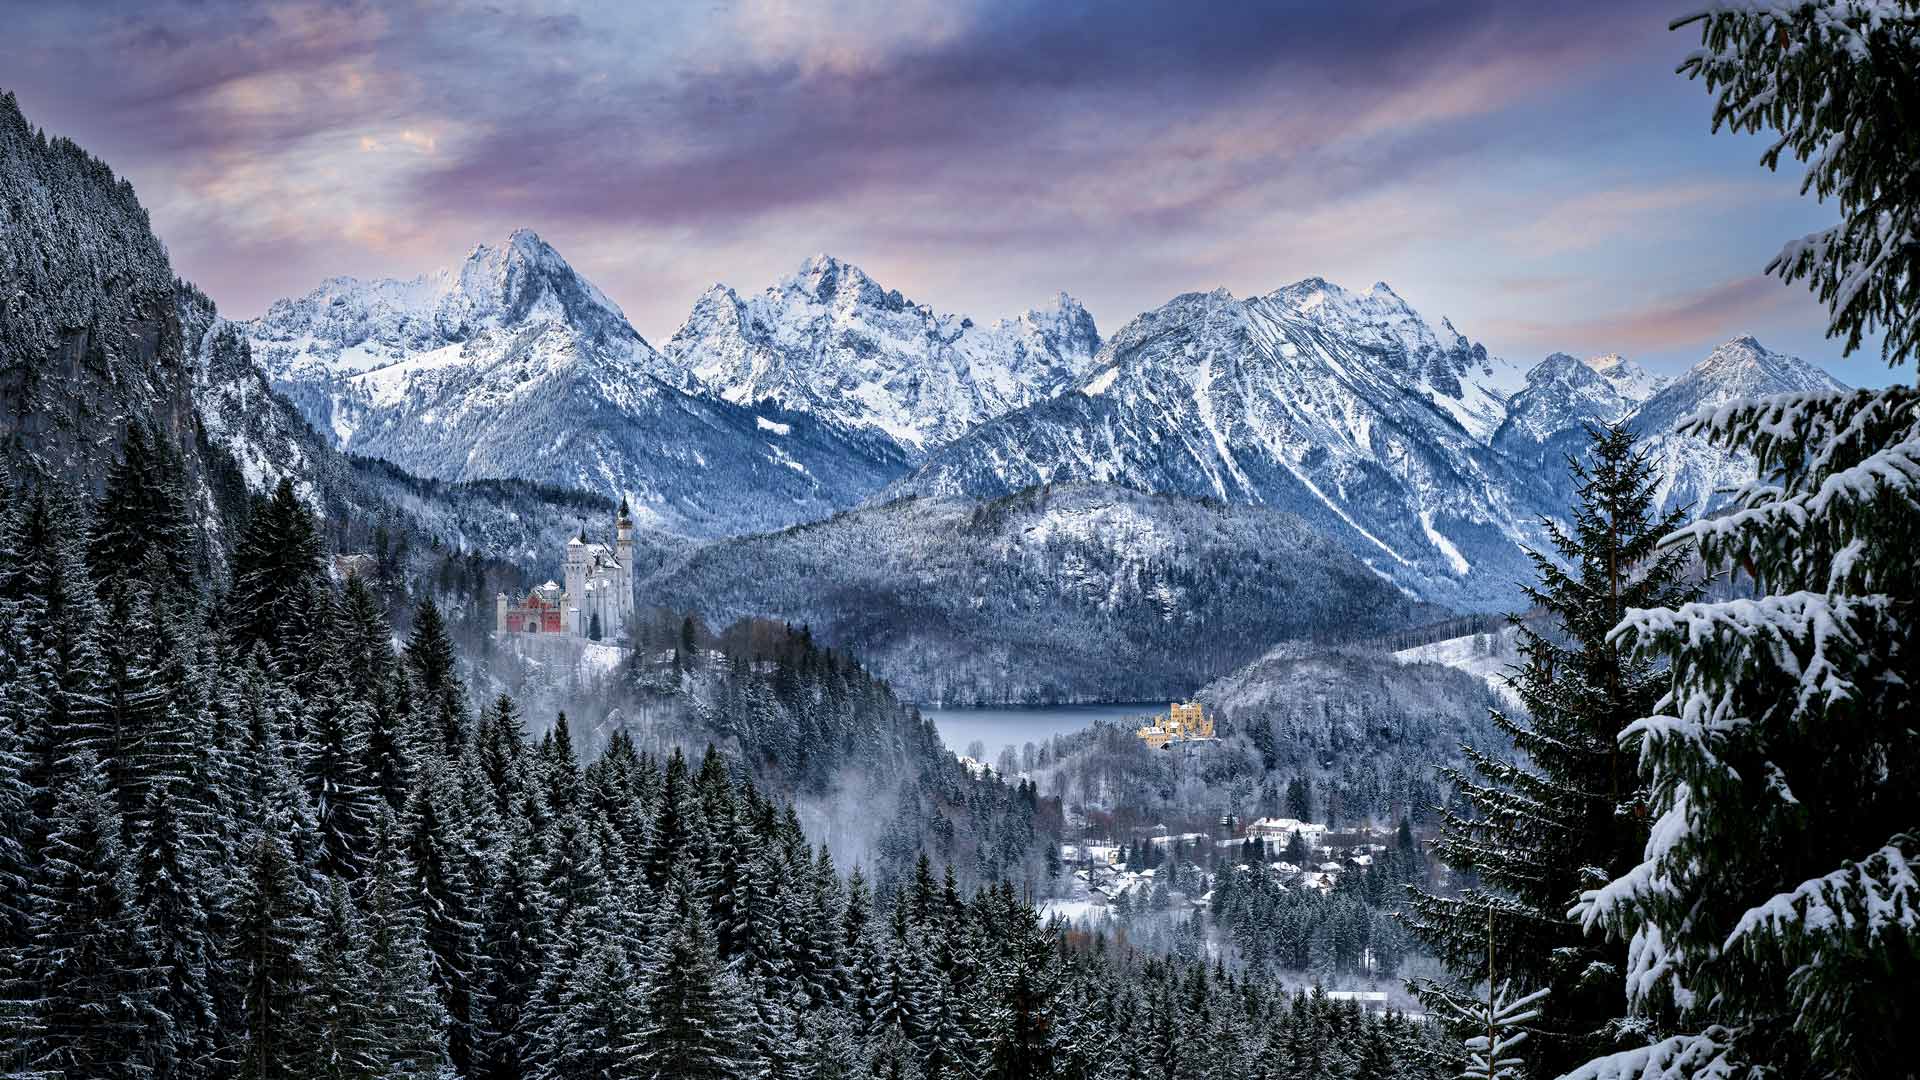 Neuschwanstein and Hohenschwangau castles, Bavaria, Germany